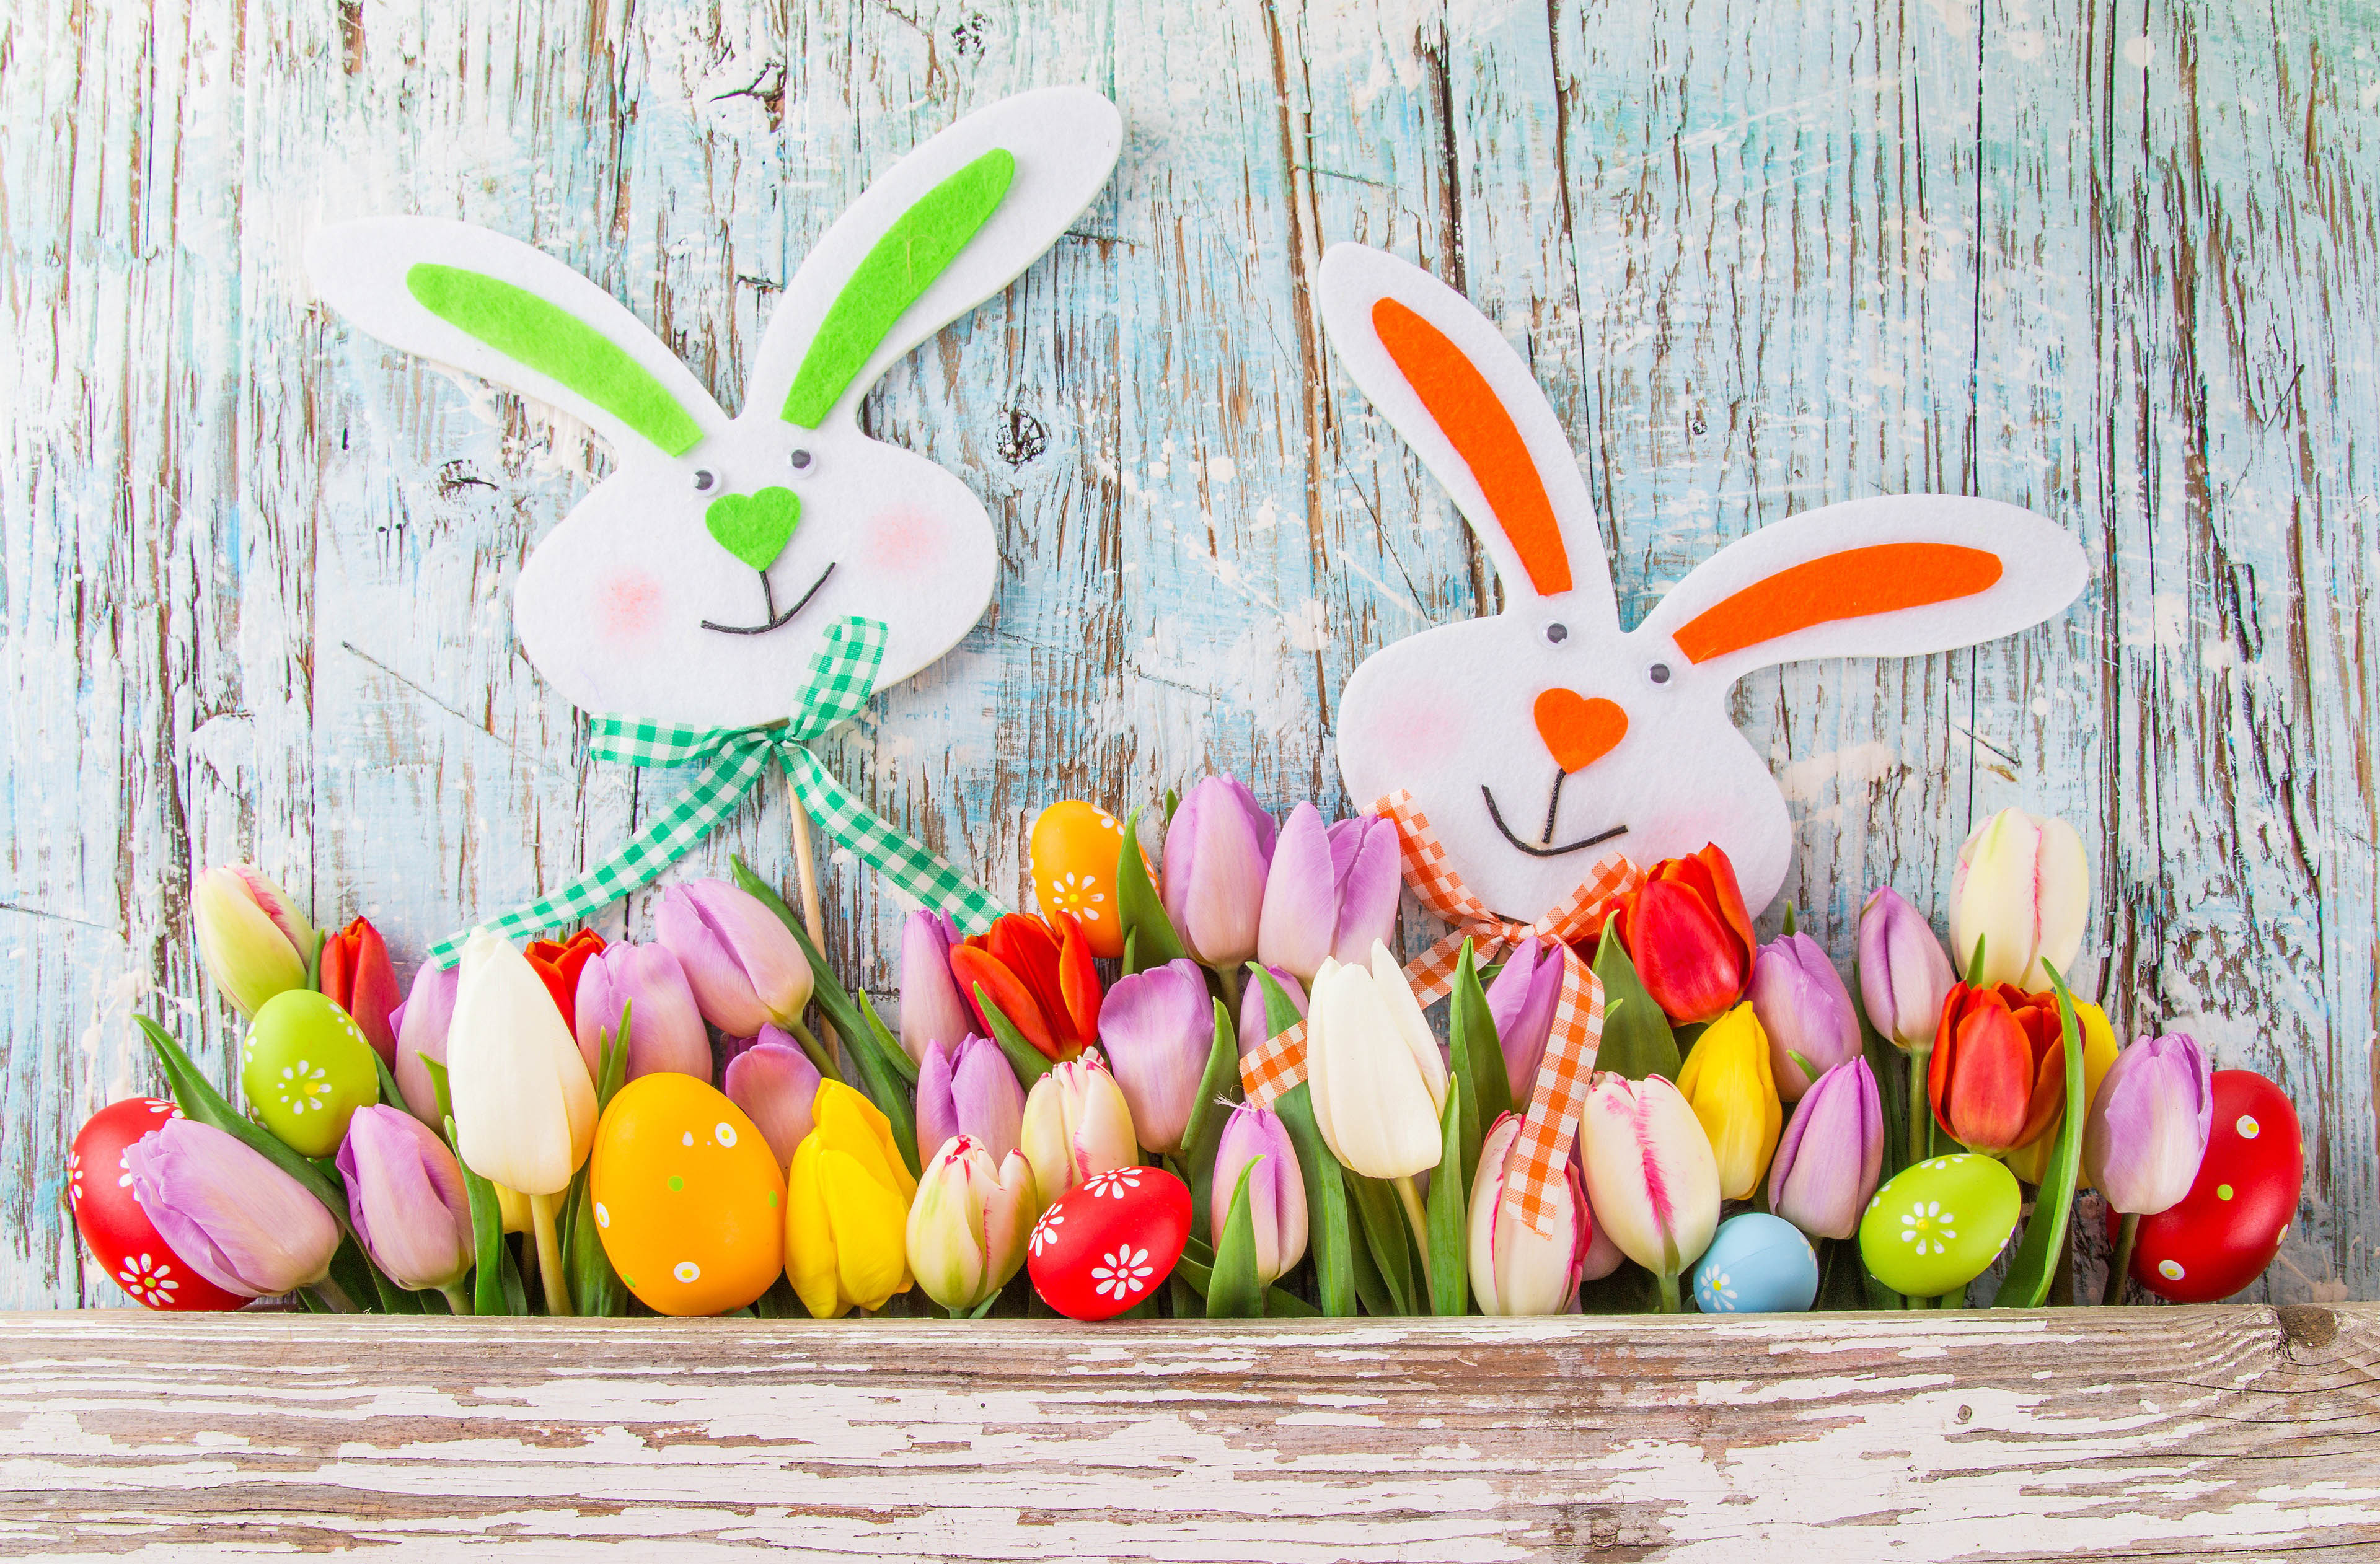 Фото бесплатно зайцы, цветные яйца, тюльпаны